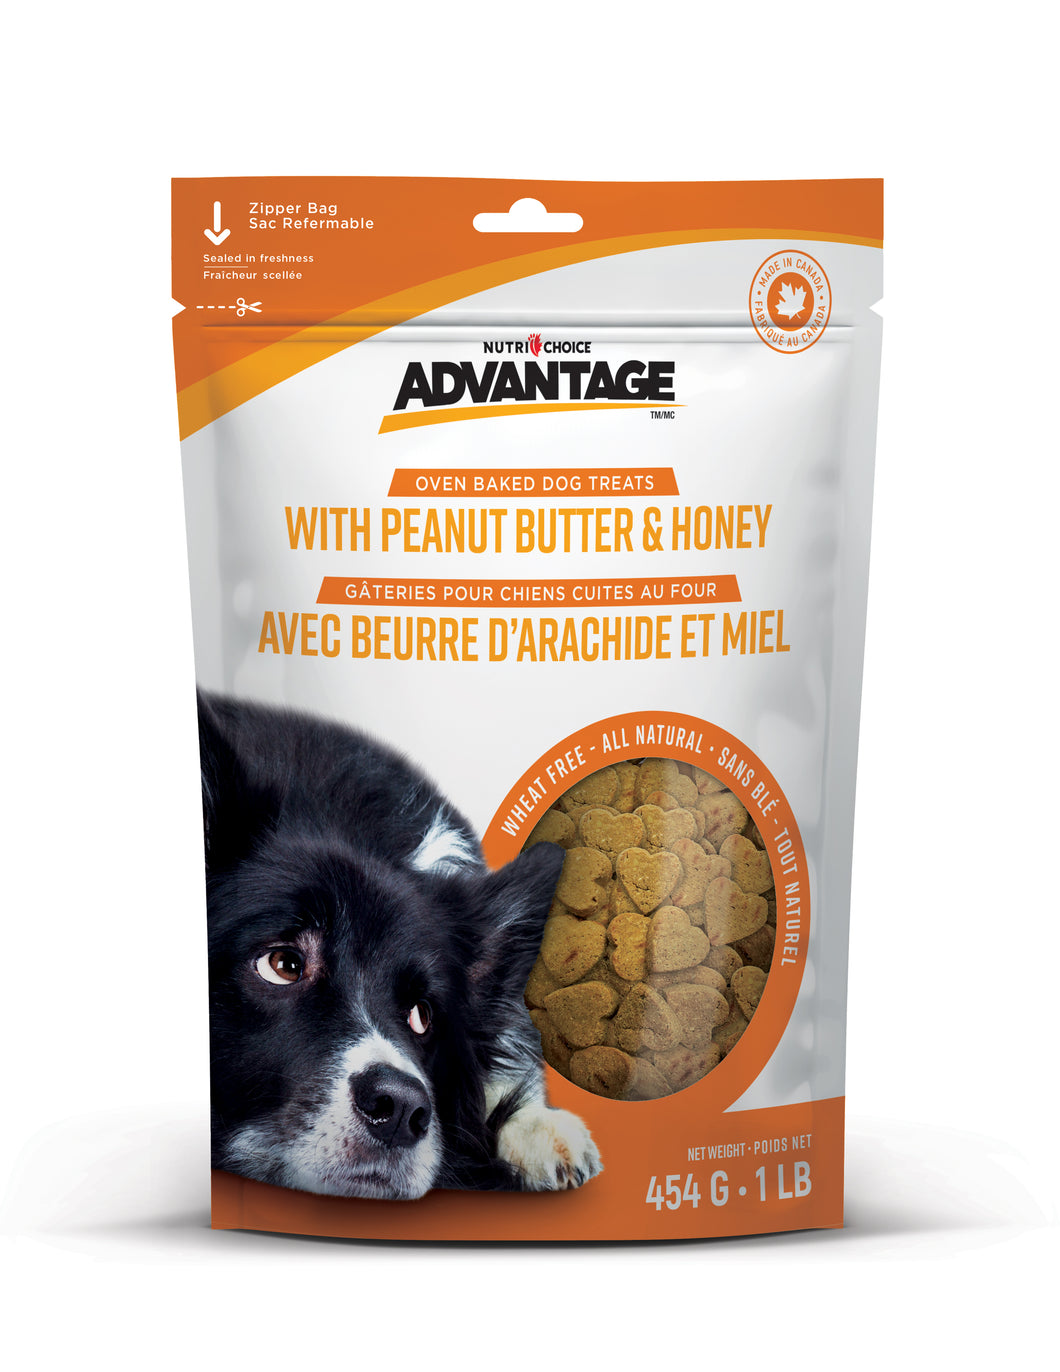 Peanut Butter & Honey Dog Treats ADVANTAGE 454g